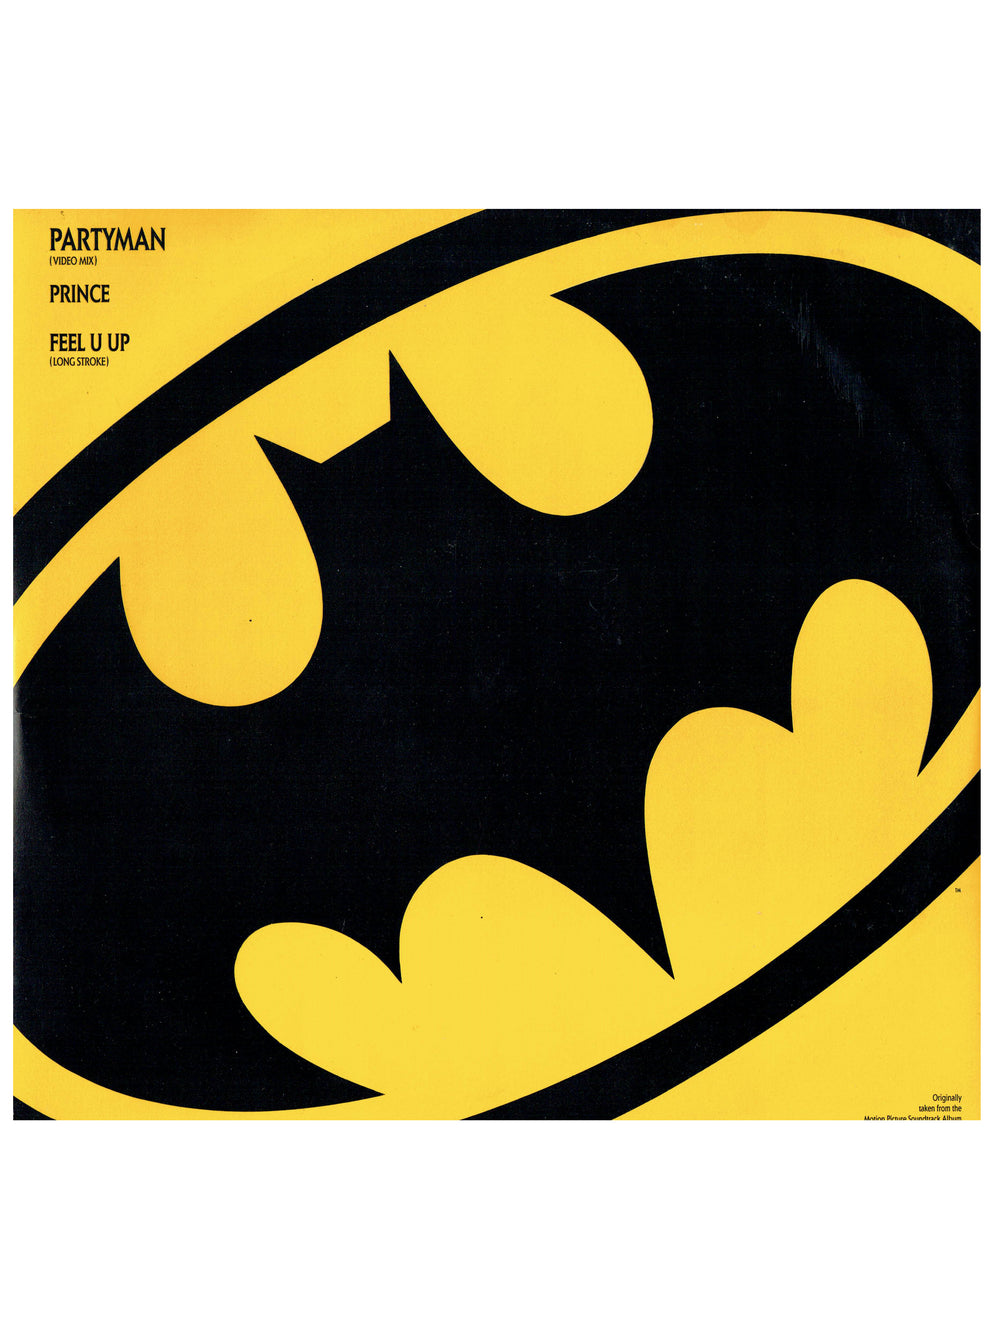 Prince – Partyman Vinyl 12" Uk Preloved: 1989